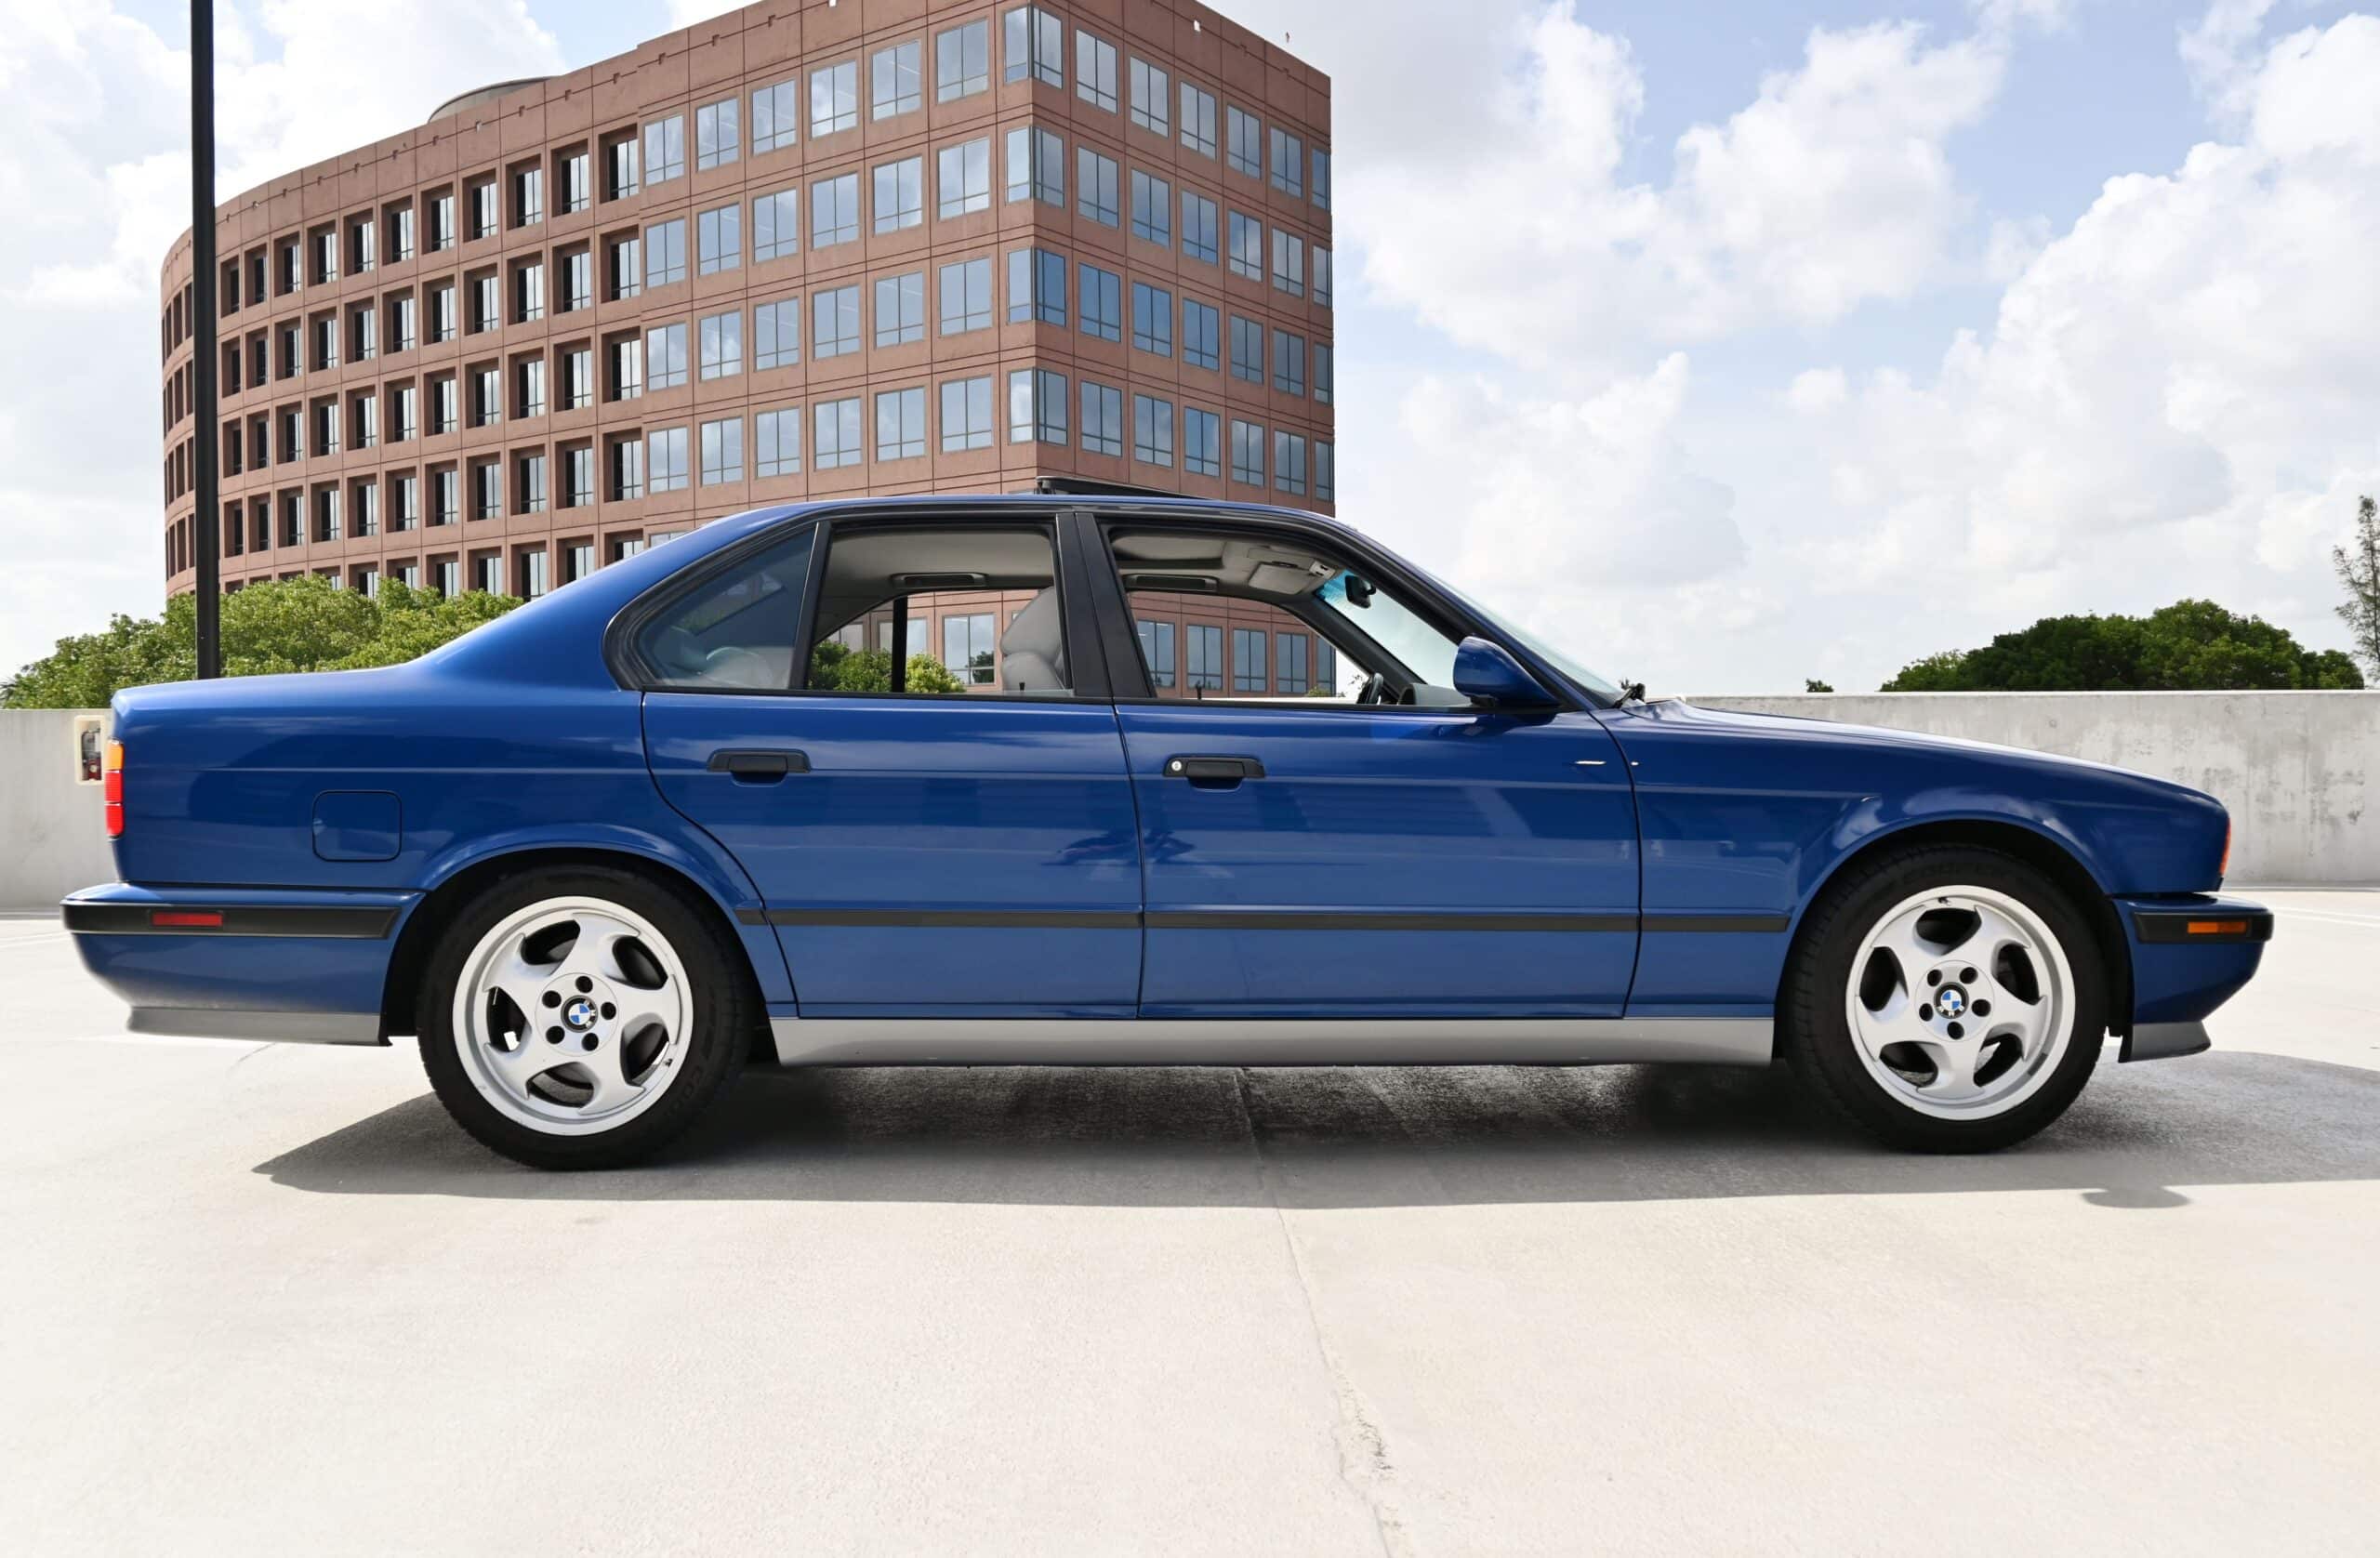 1993 BMW M5 M5 Avusblau Metallic | E34 M5 | S38 5-spd Manual | All Stock | $29,000 in Receipts | All Service Records Since 1998 |